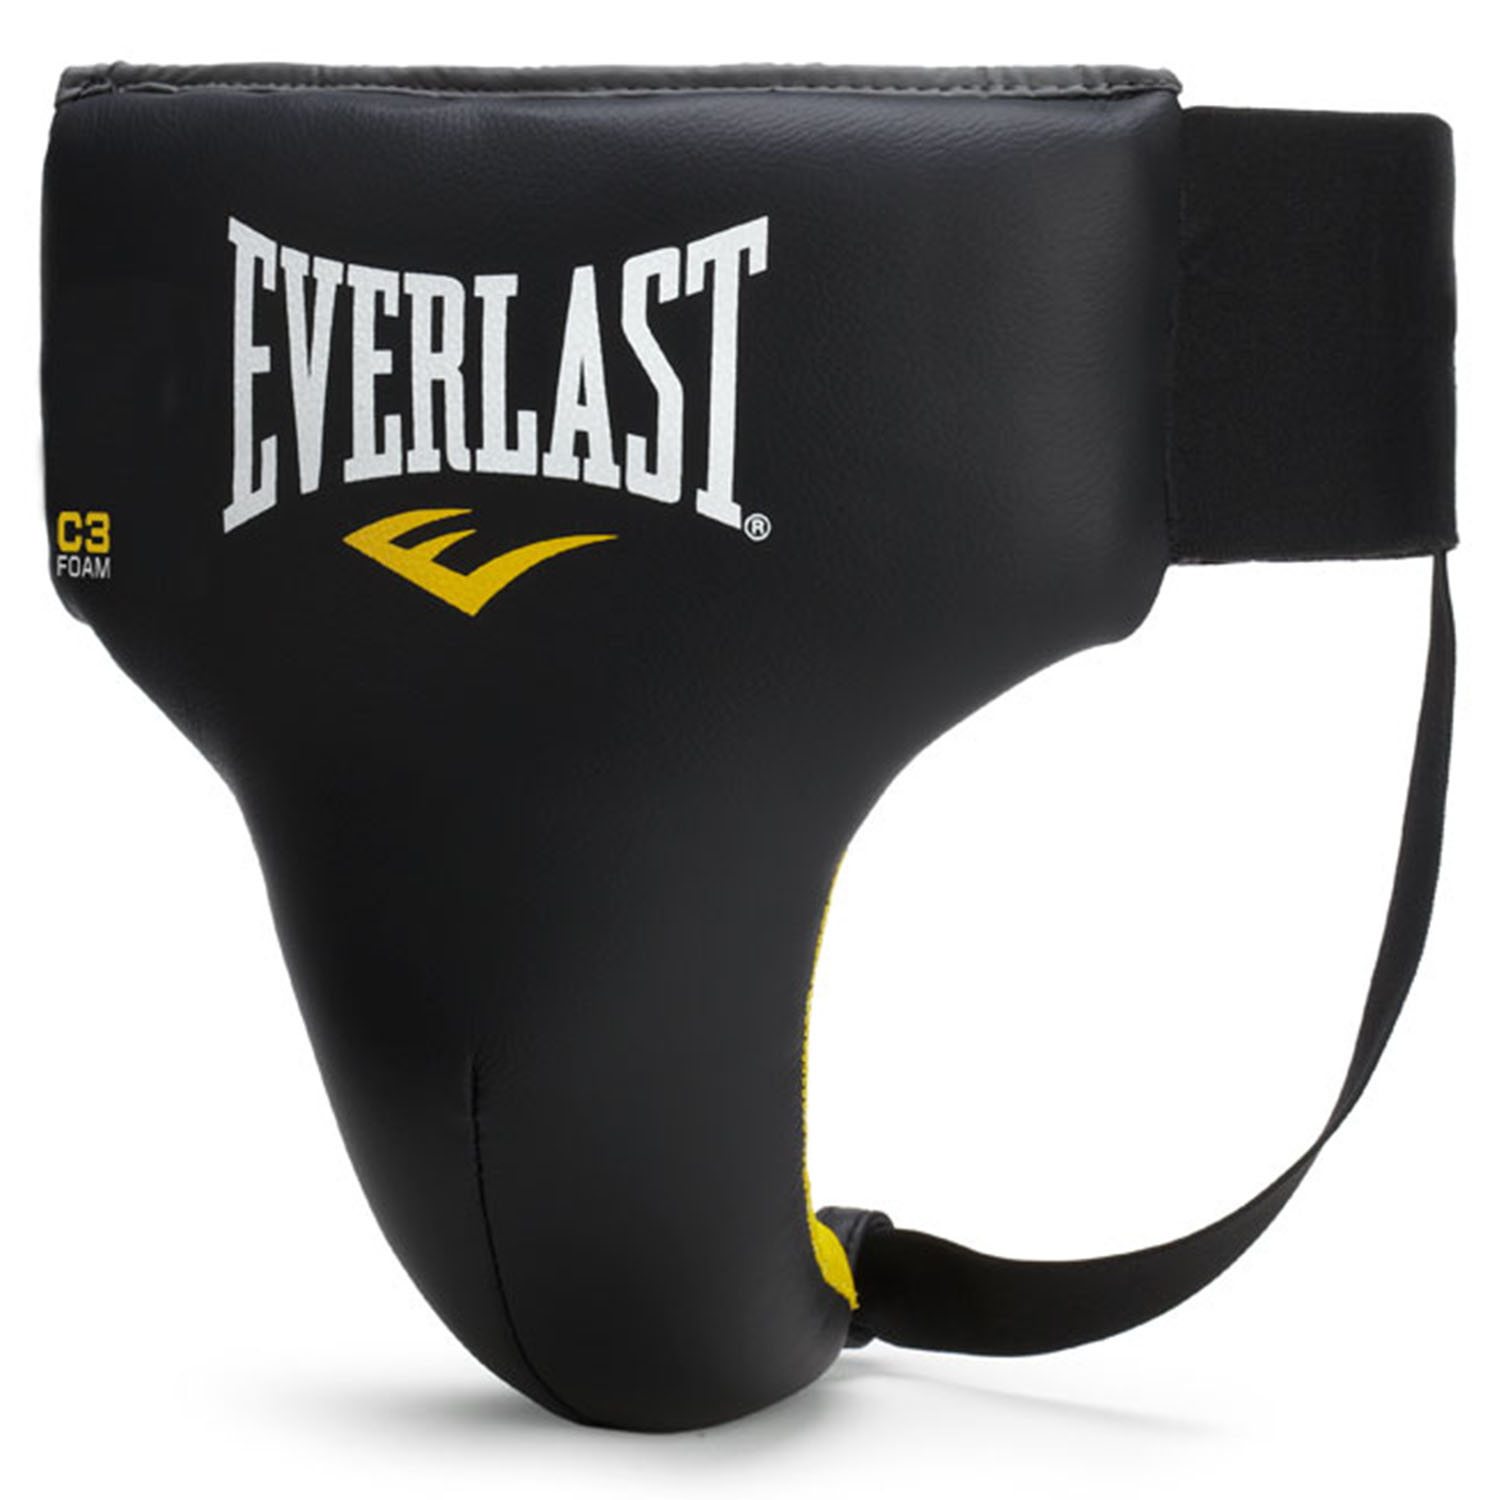 Everlast Groin Guard, C3 Pro, black, L